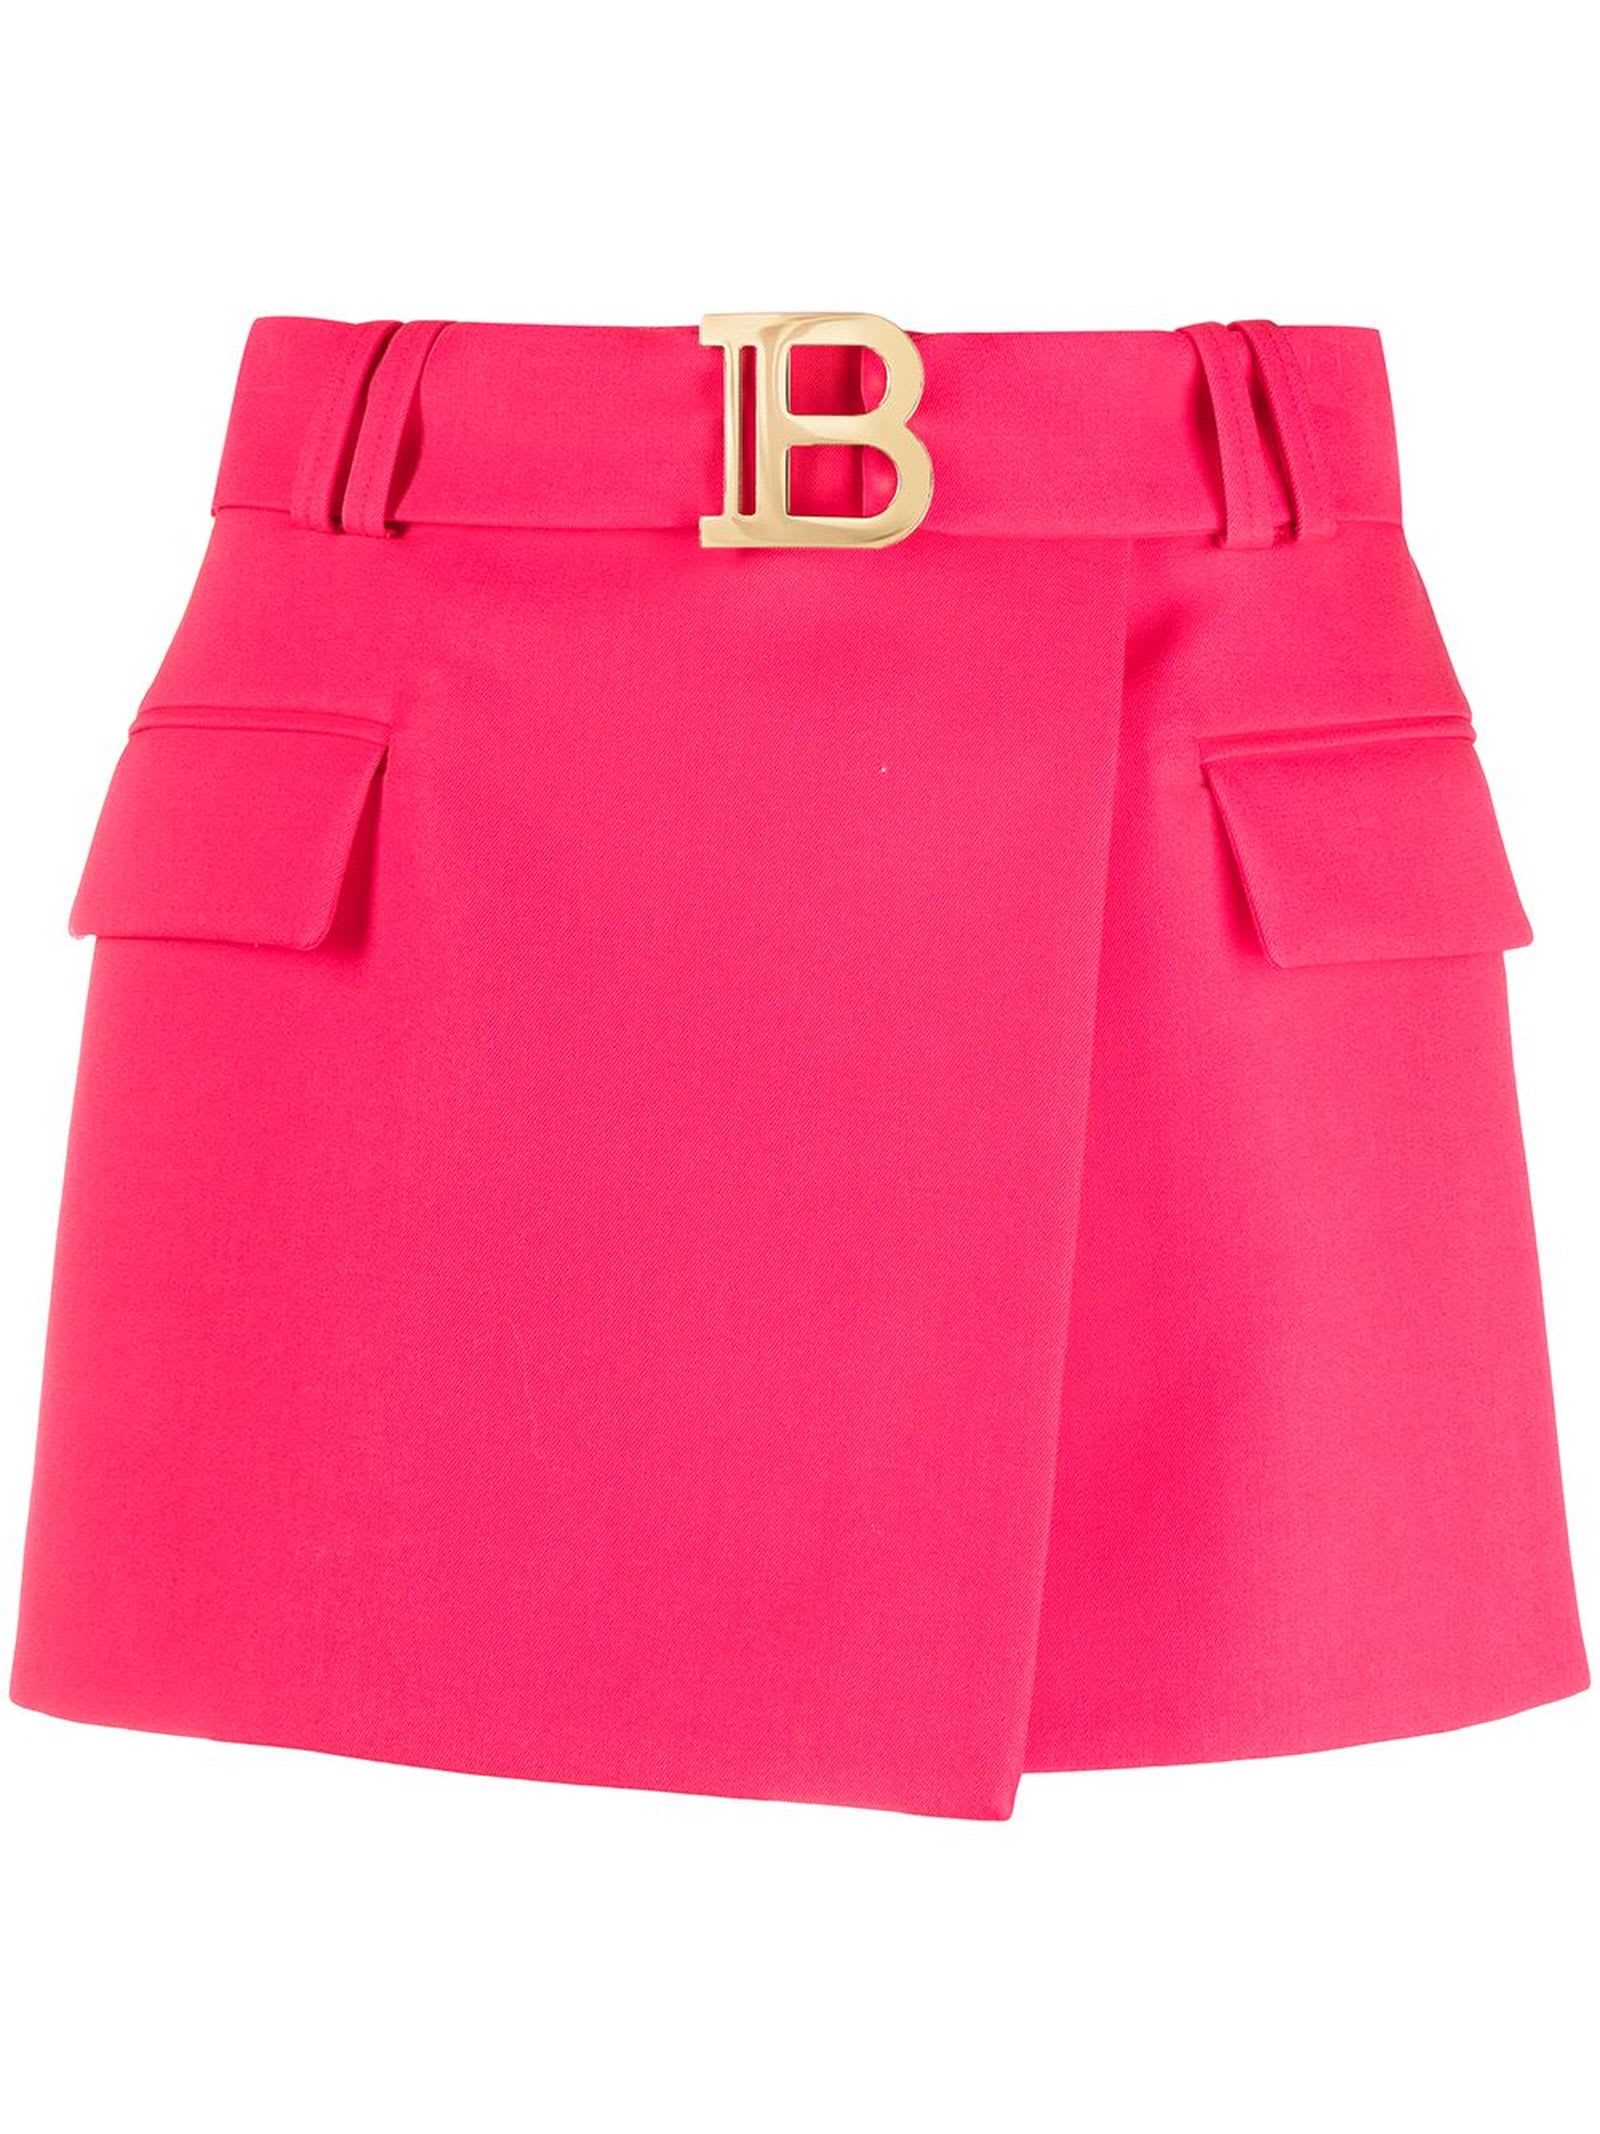 Balmain Short Fuchsia Grain De Poudre Fabric Skirt